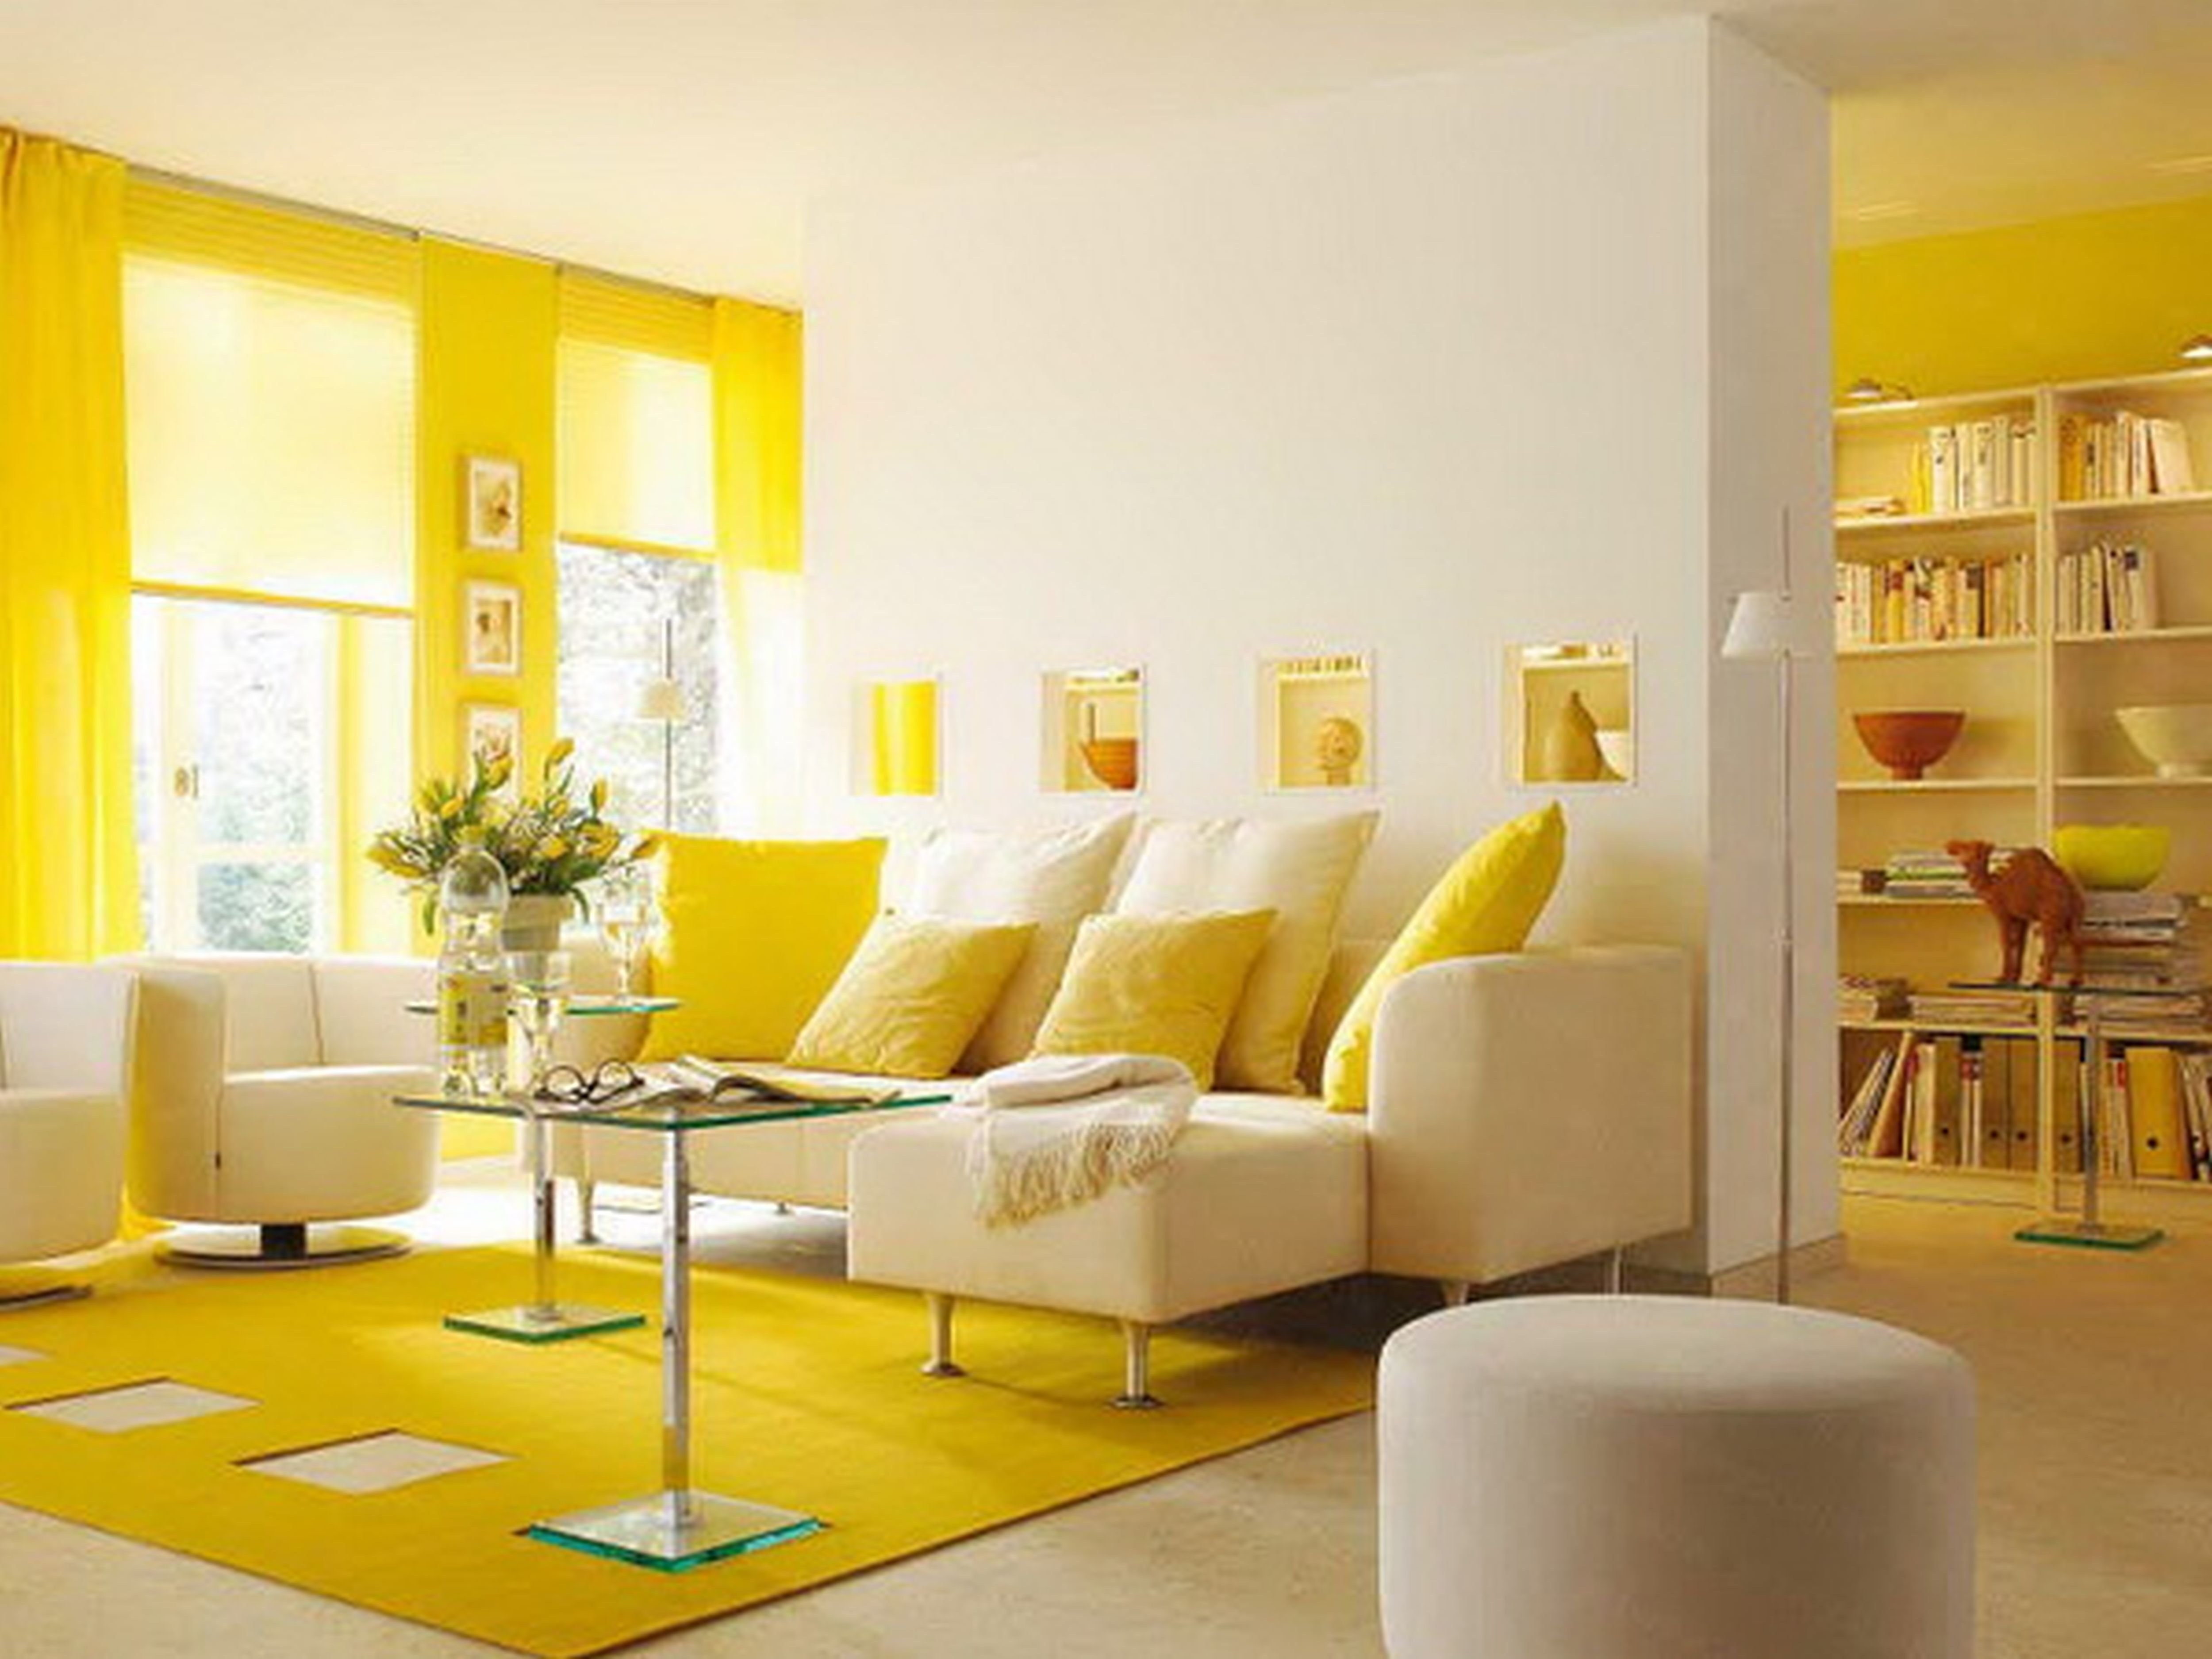 Горчично лимонный. Желтая гостиная. Желтый интерьер. Желтый цвет в интерьере. Гостиная с желтыми стенами.